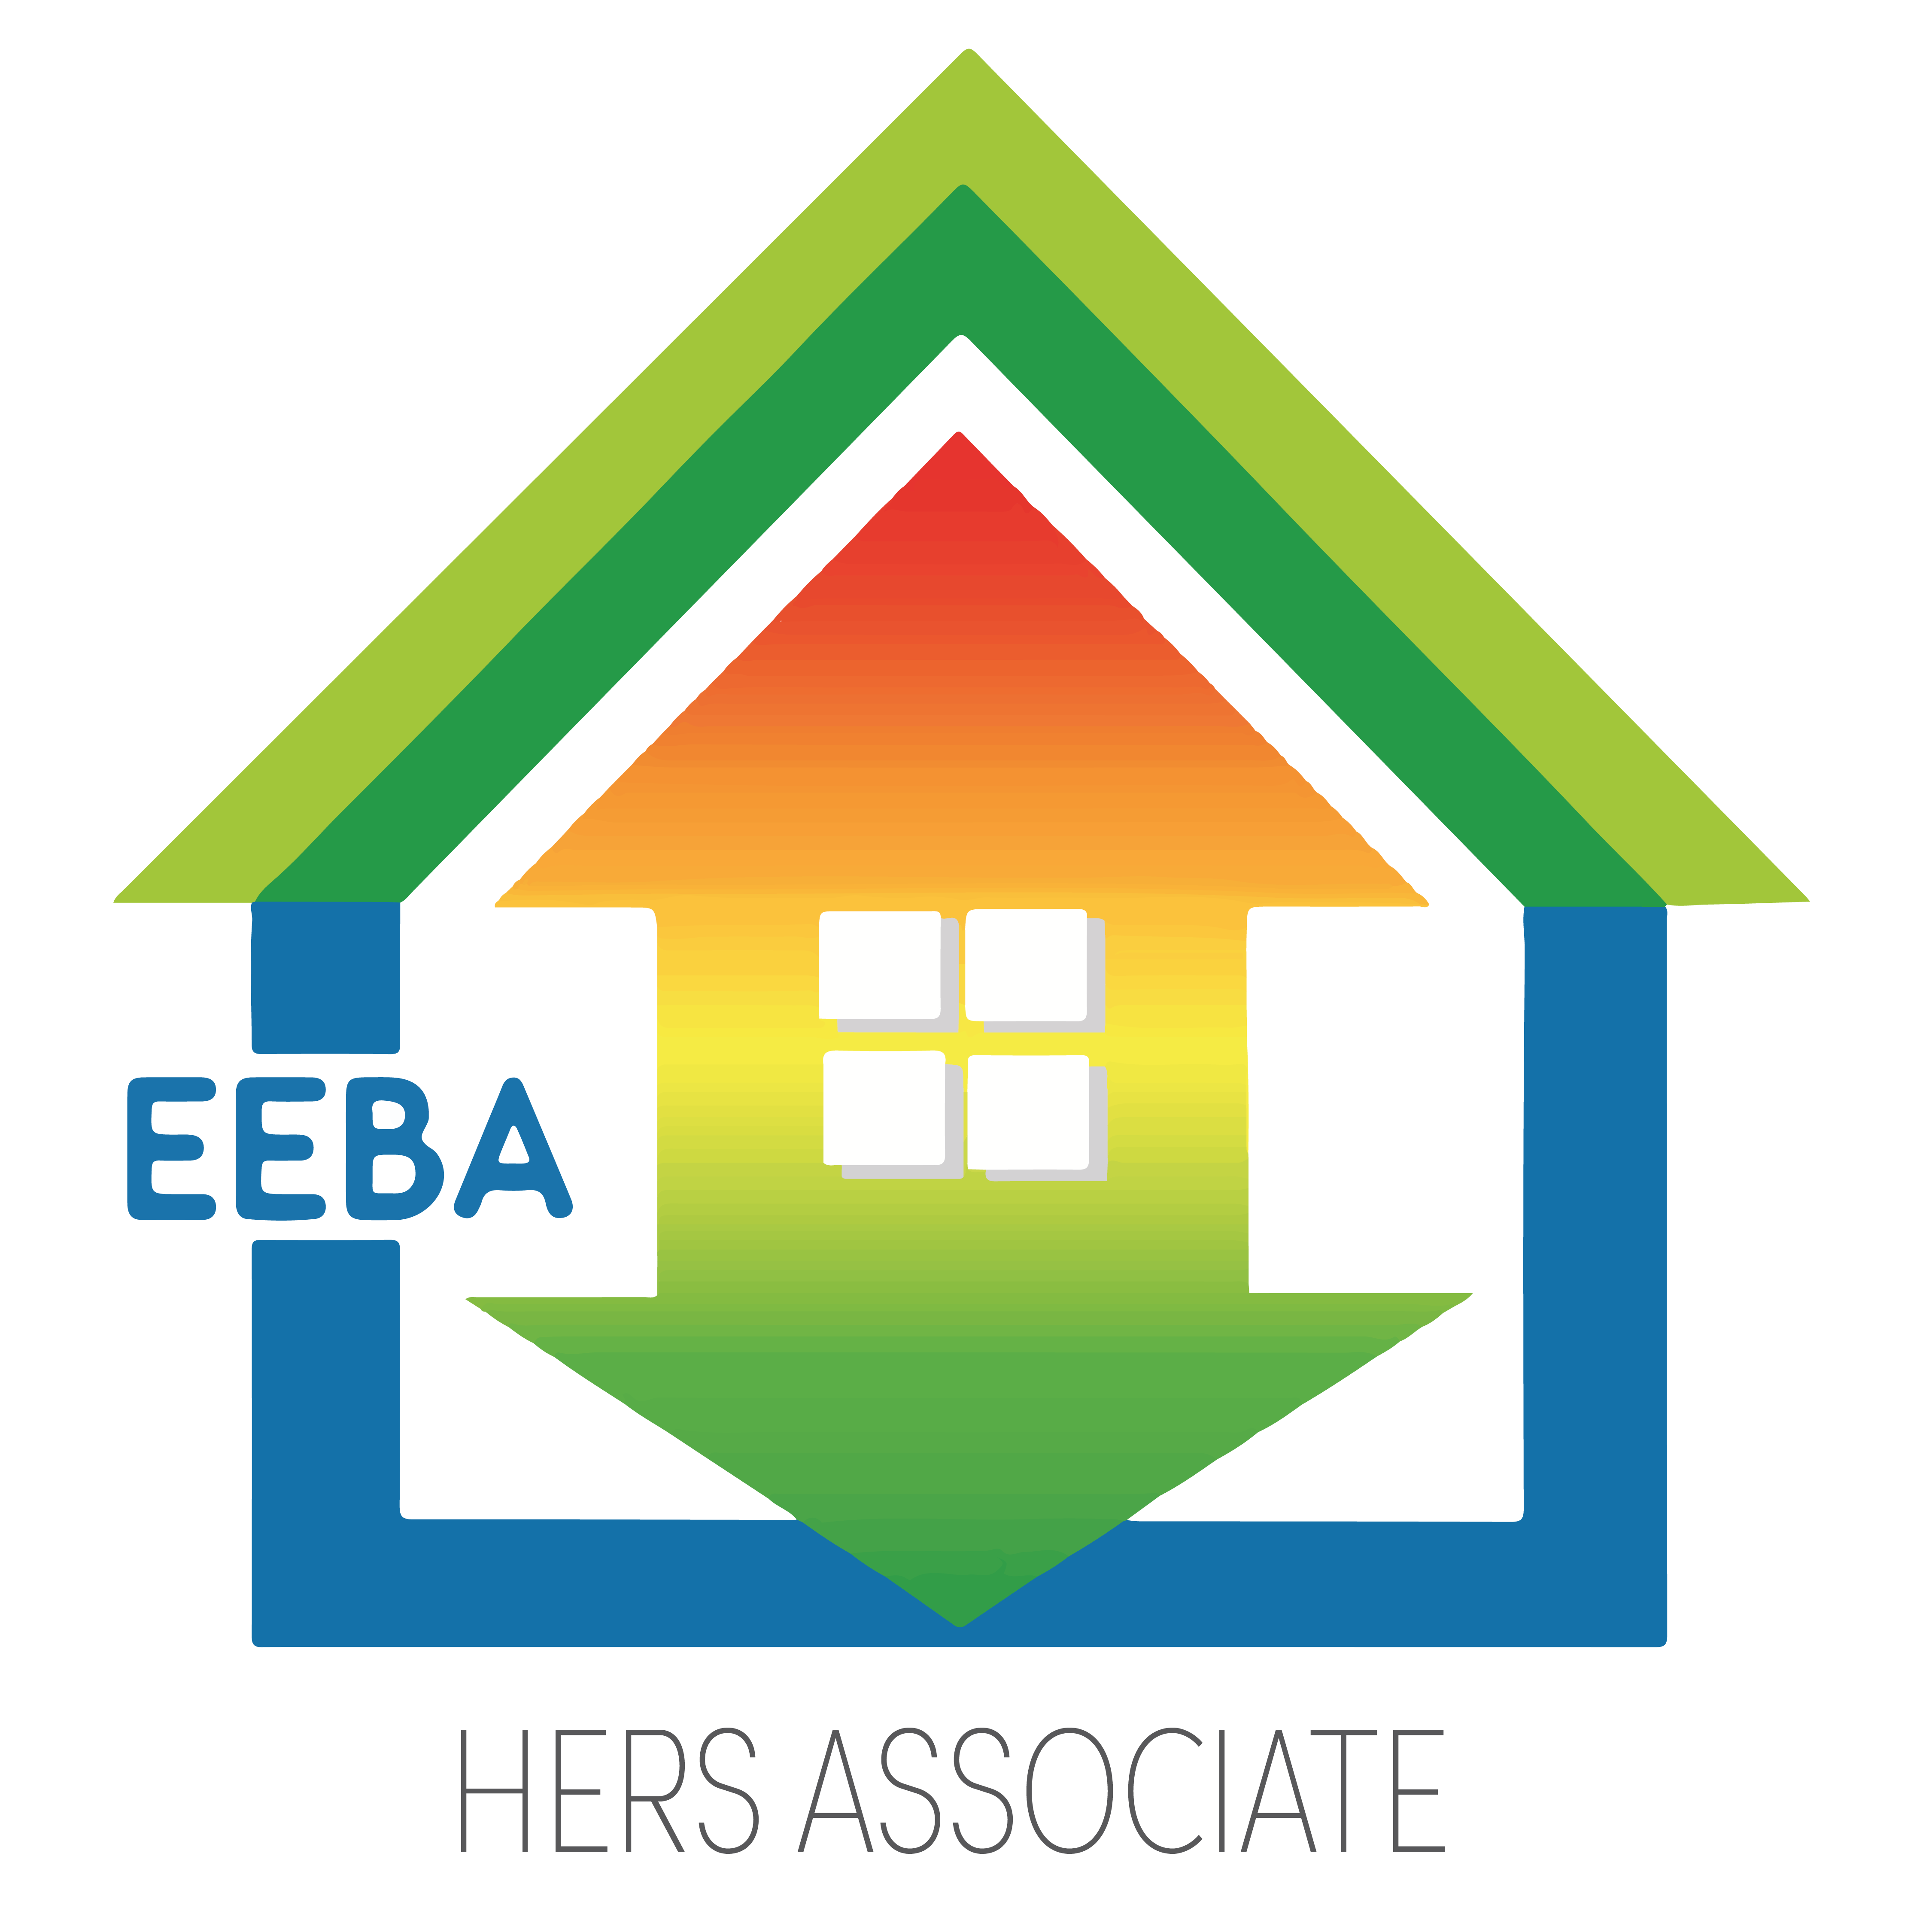 EEBA HERS Associate Designation